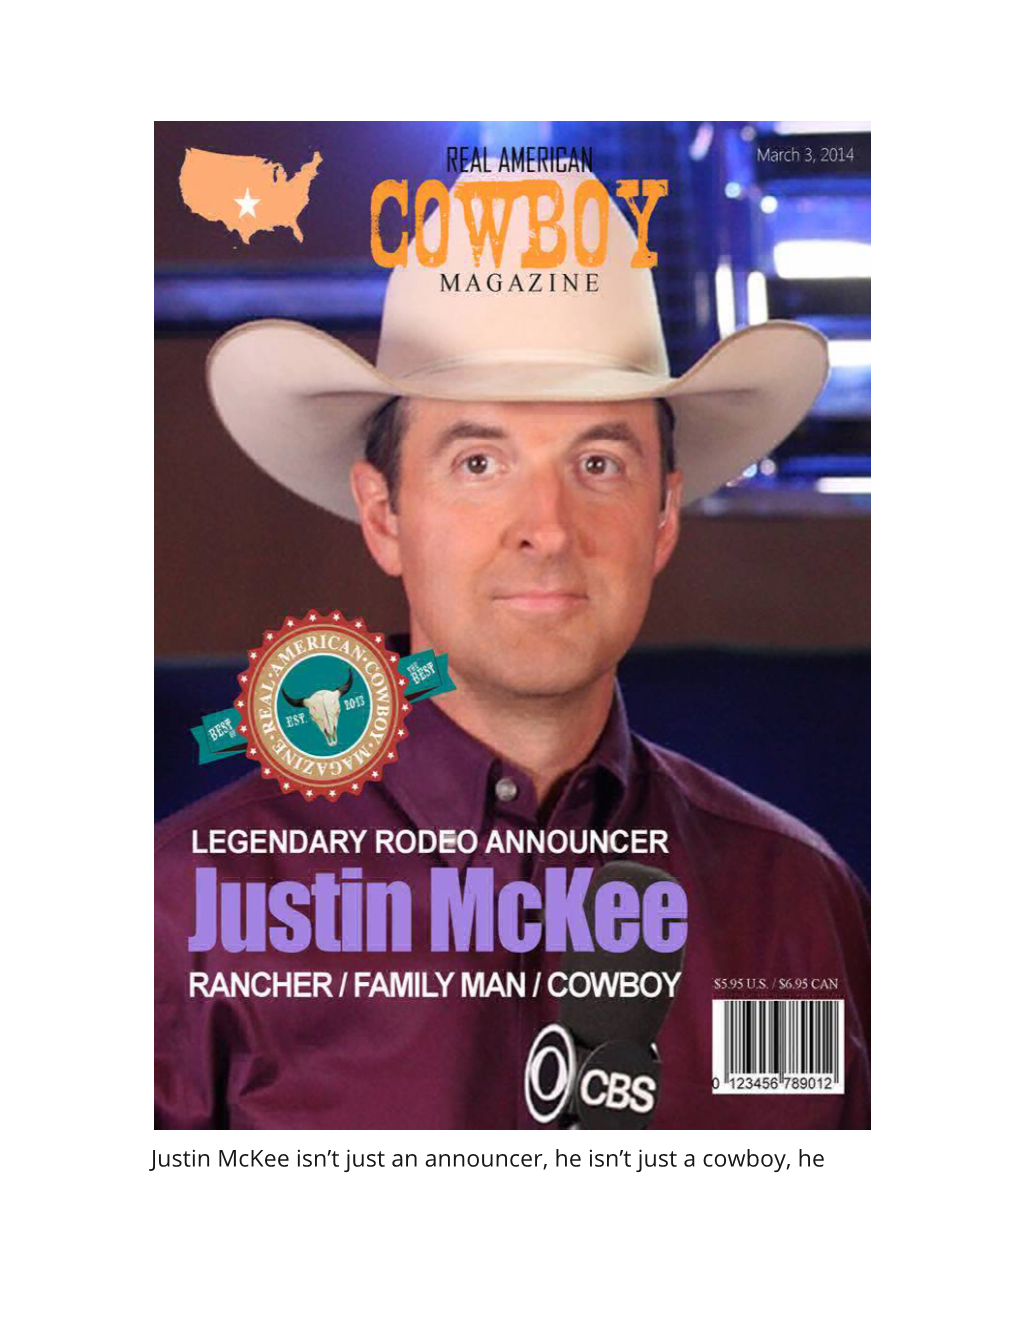 Justin Mckee Isn't Just an Announcer, He Isn't Just a Cowboy, He